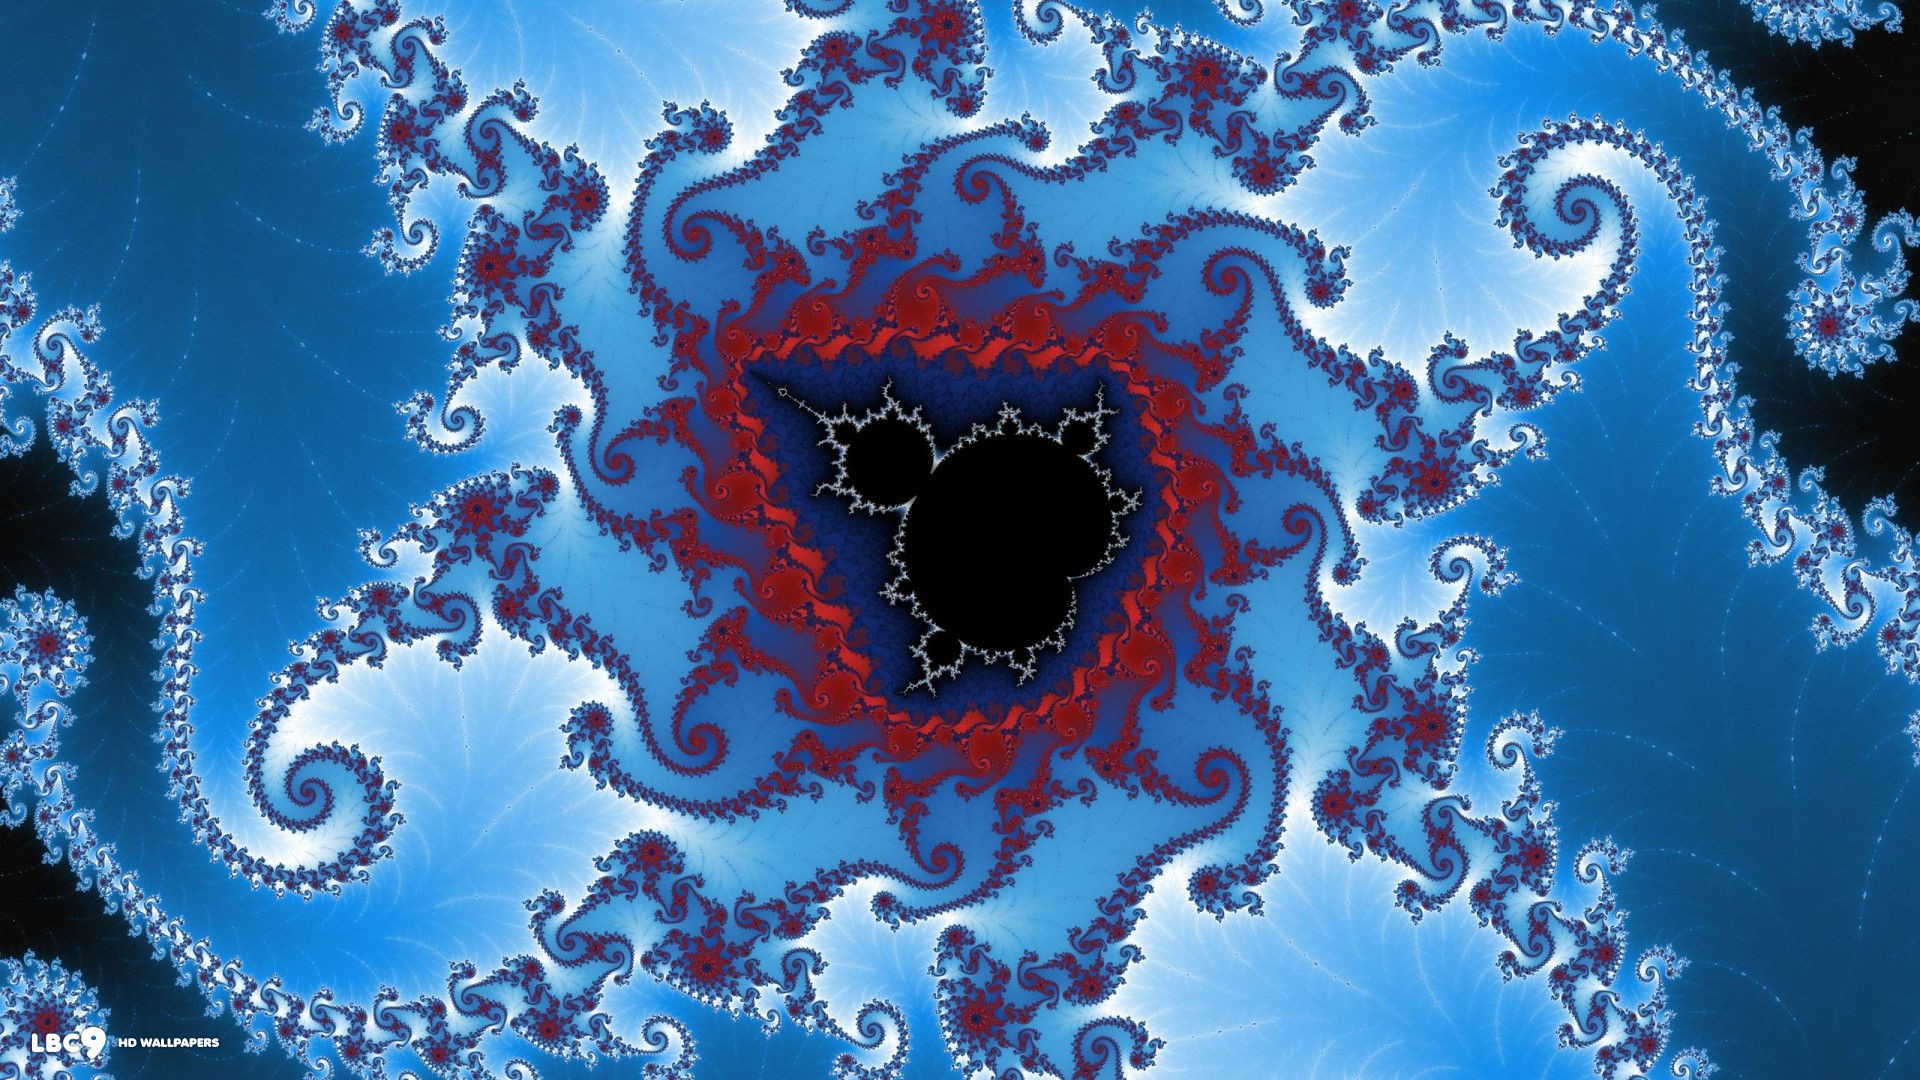 Mandelbrot set wallpapers and fractals hd backgrounds